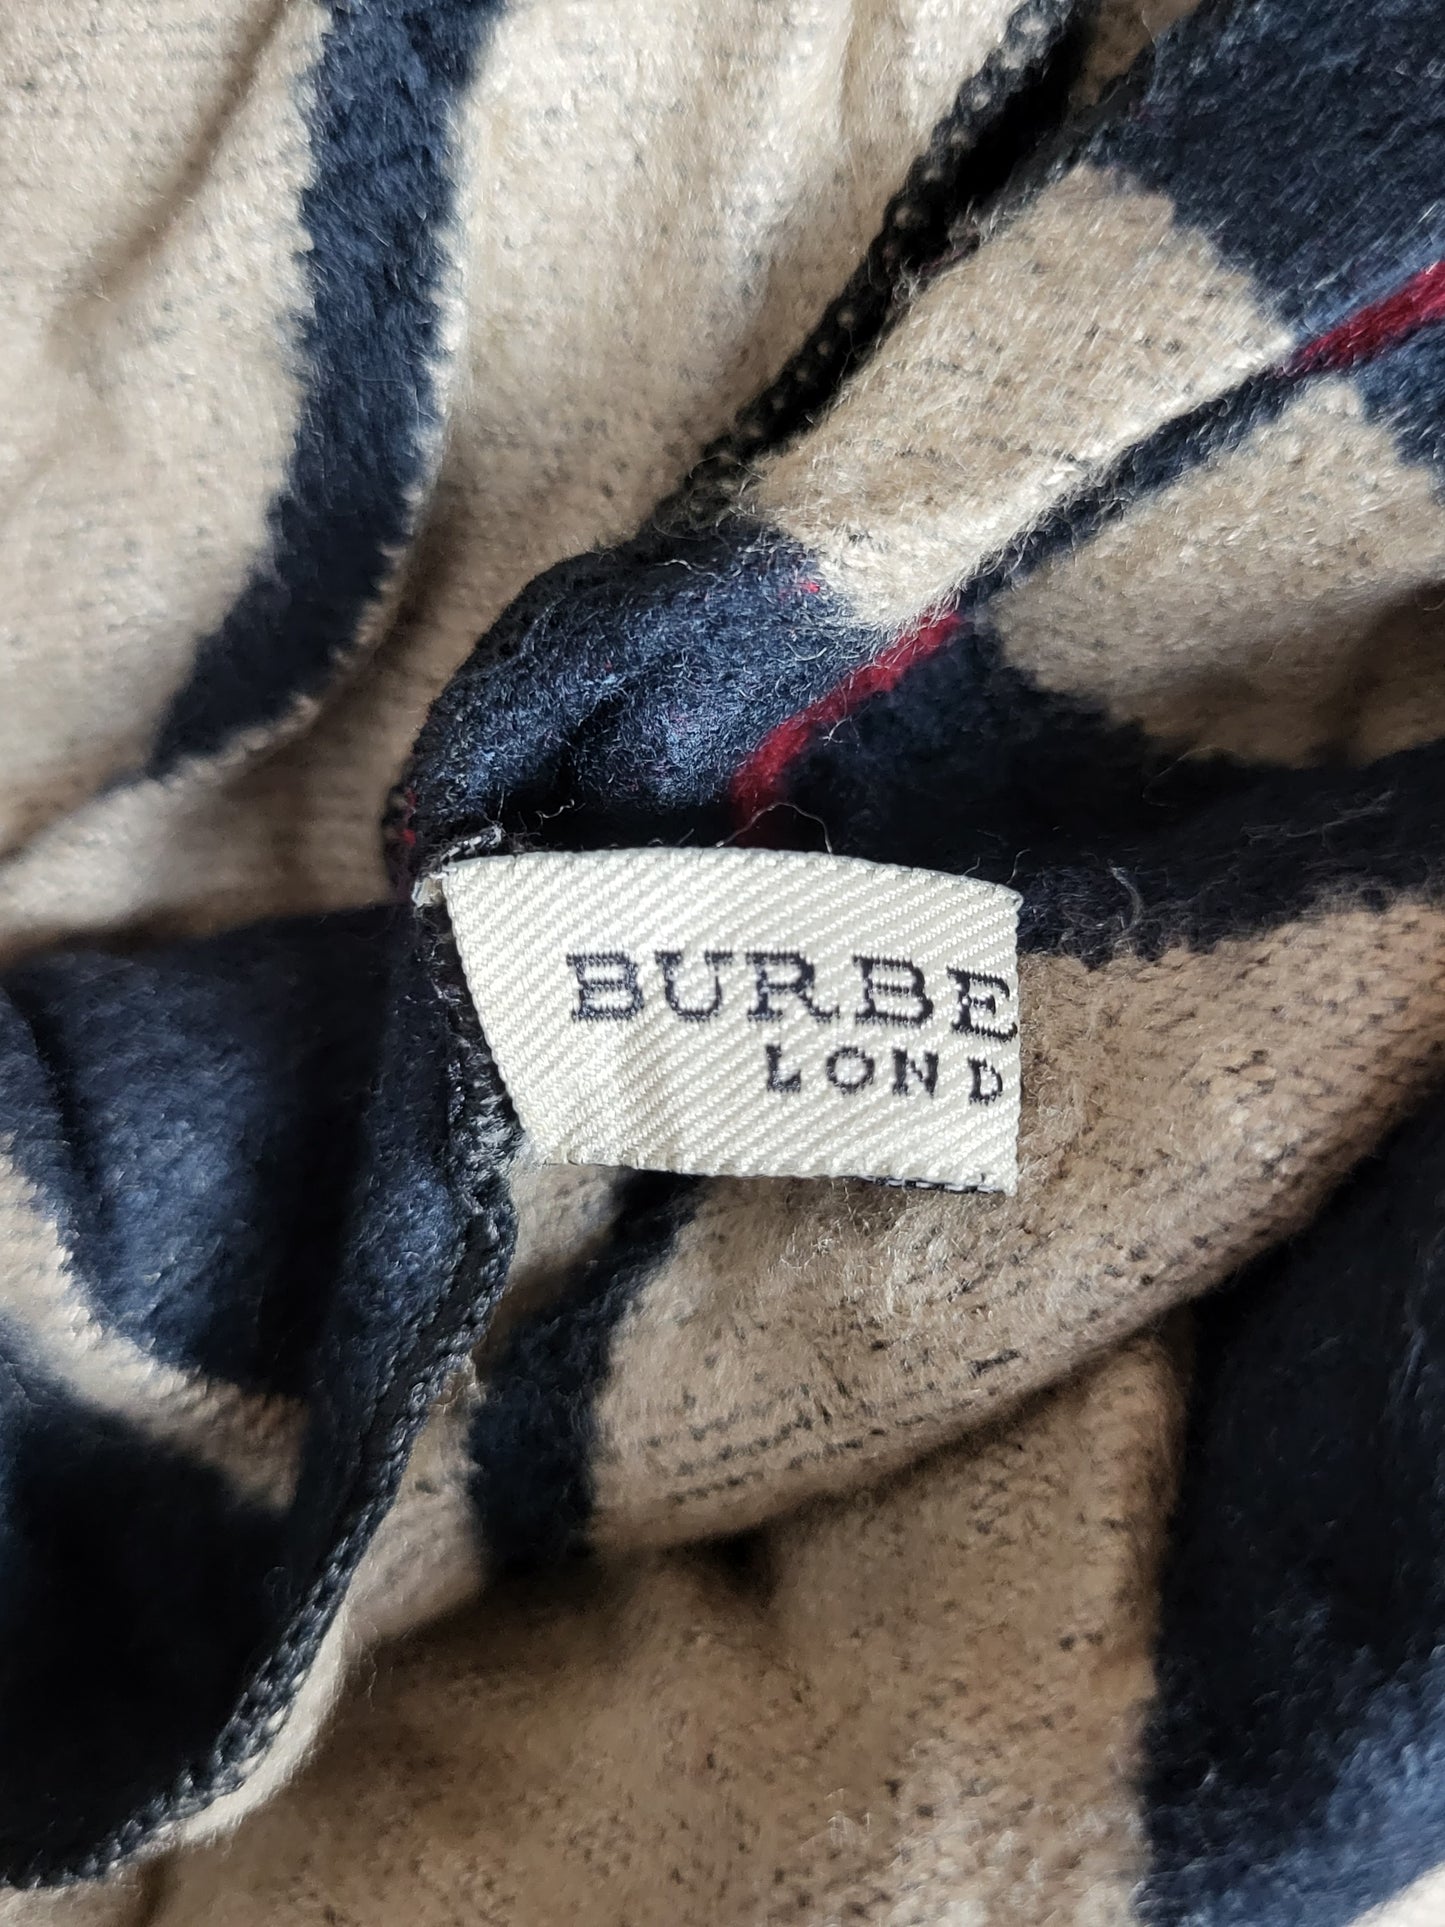 Burberry London - Vintage Schal / Tuch - Dunkelblau Logo - Kaschmir - 172 x 60